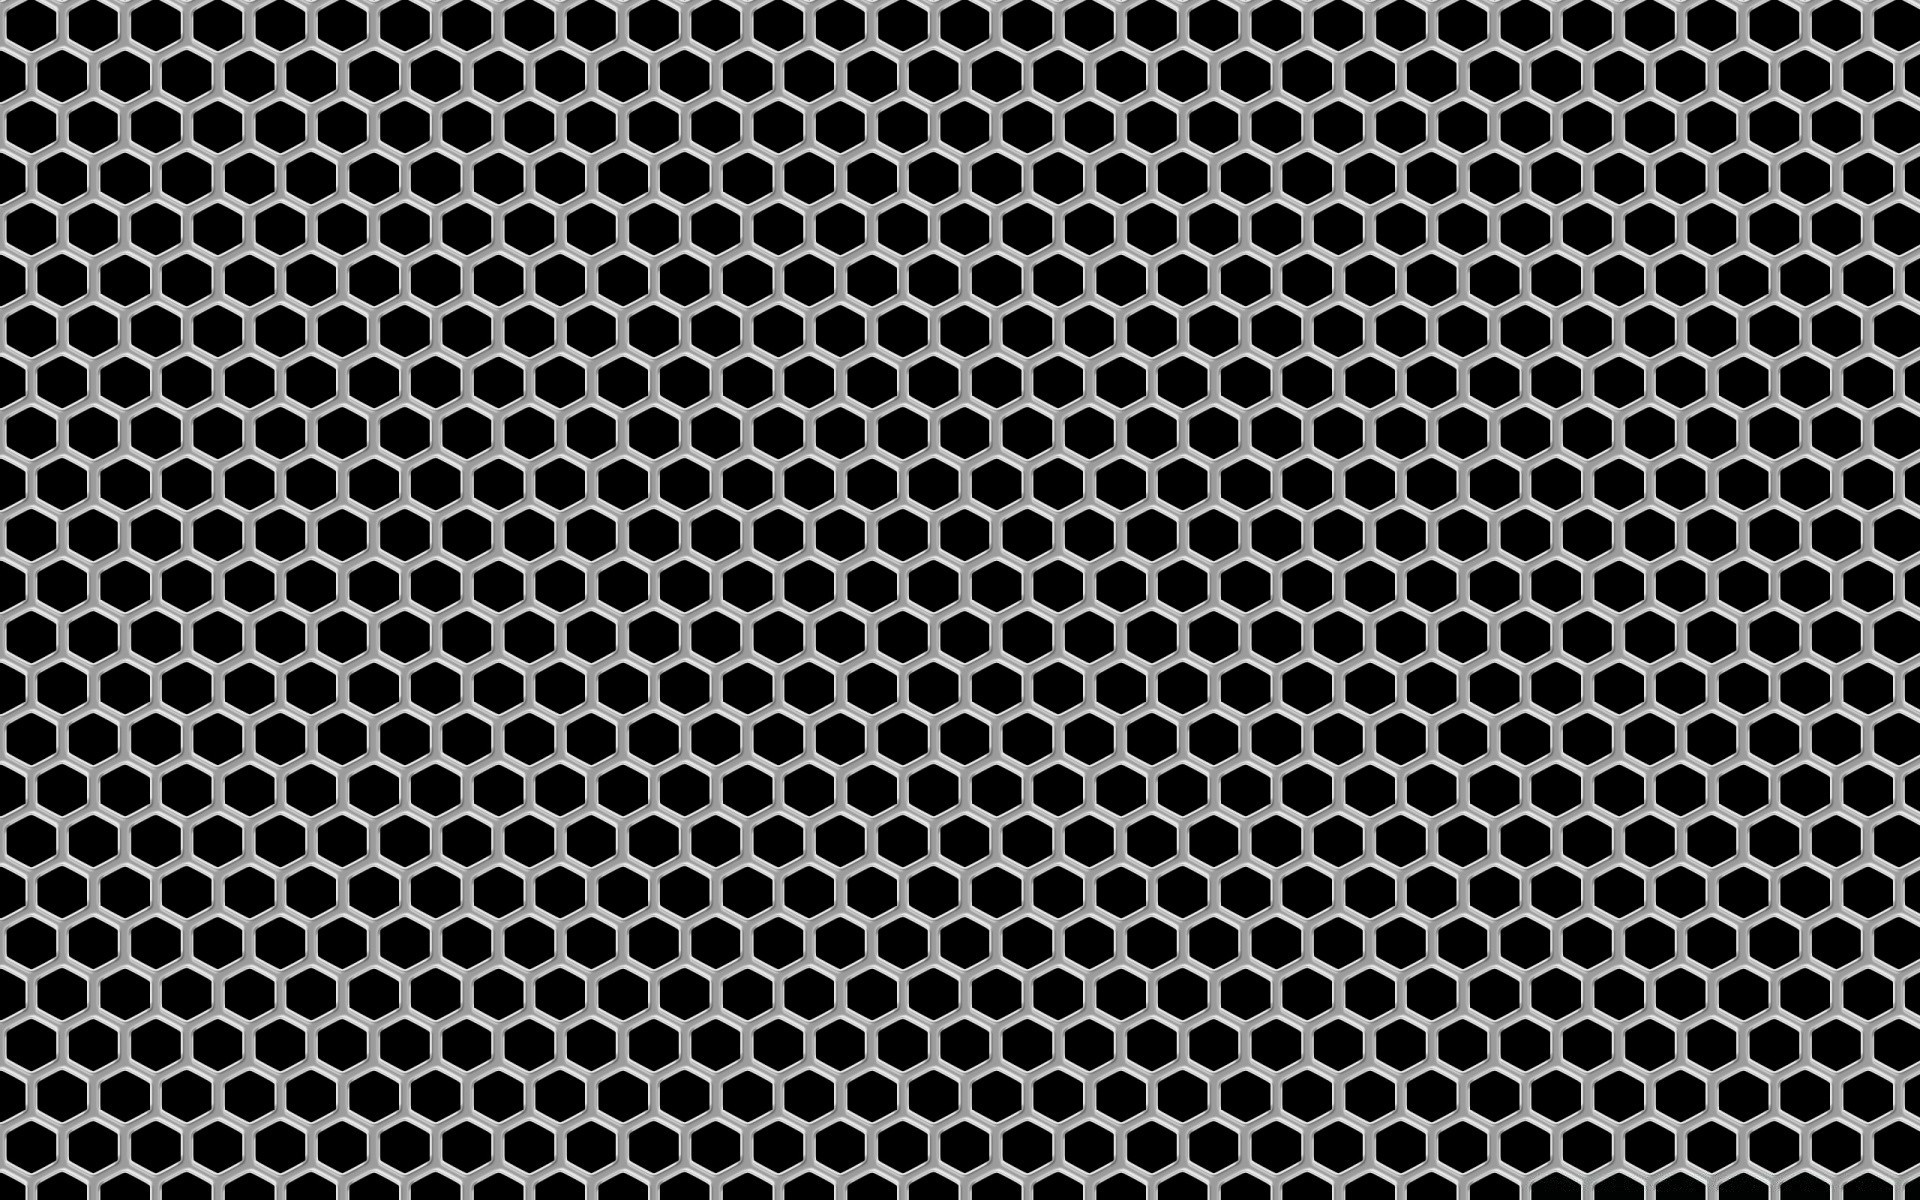 texture design pattern net steel desktop aluminum wallpaper template grid graphic illustration metallic geometric abstract futuristic modern alloy chrome square